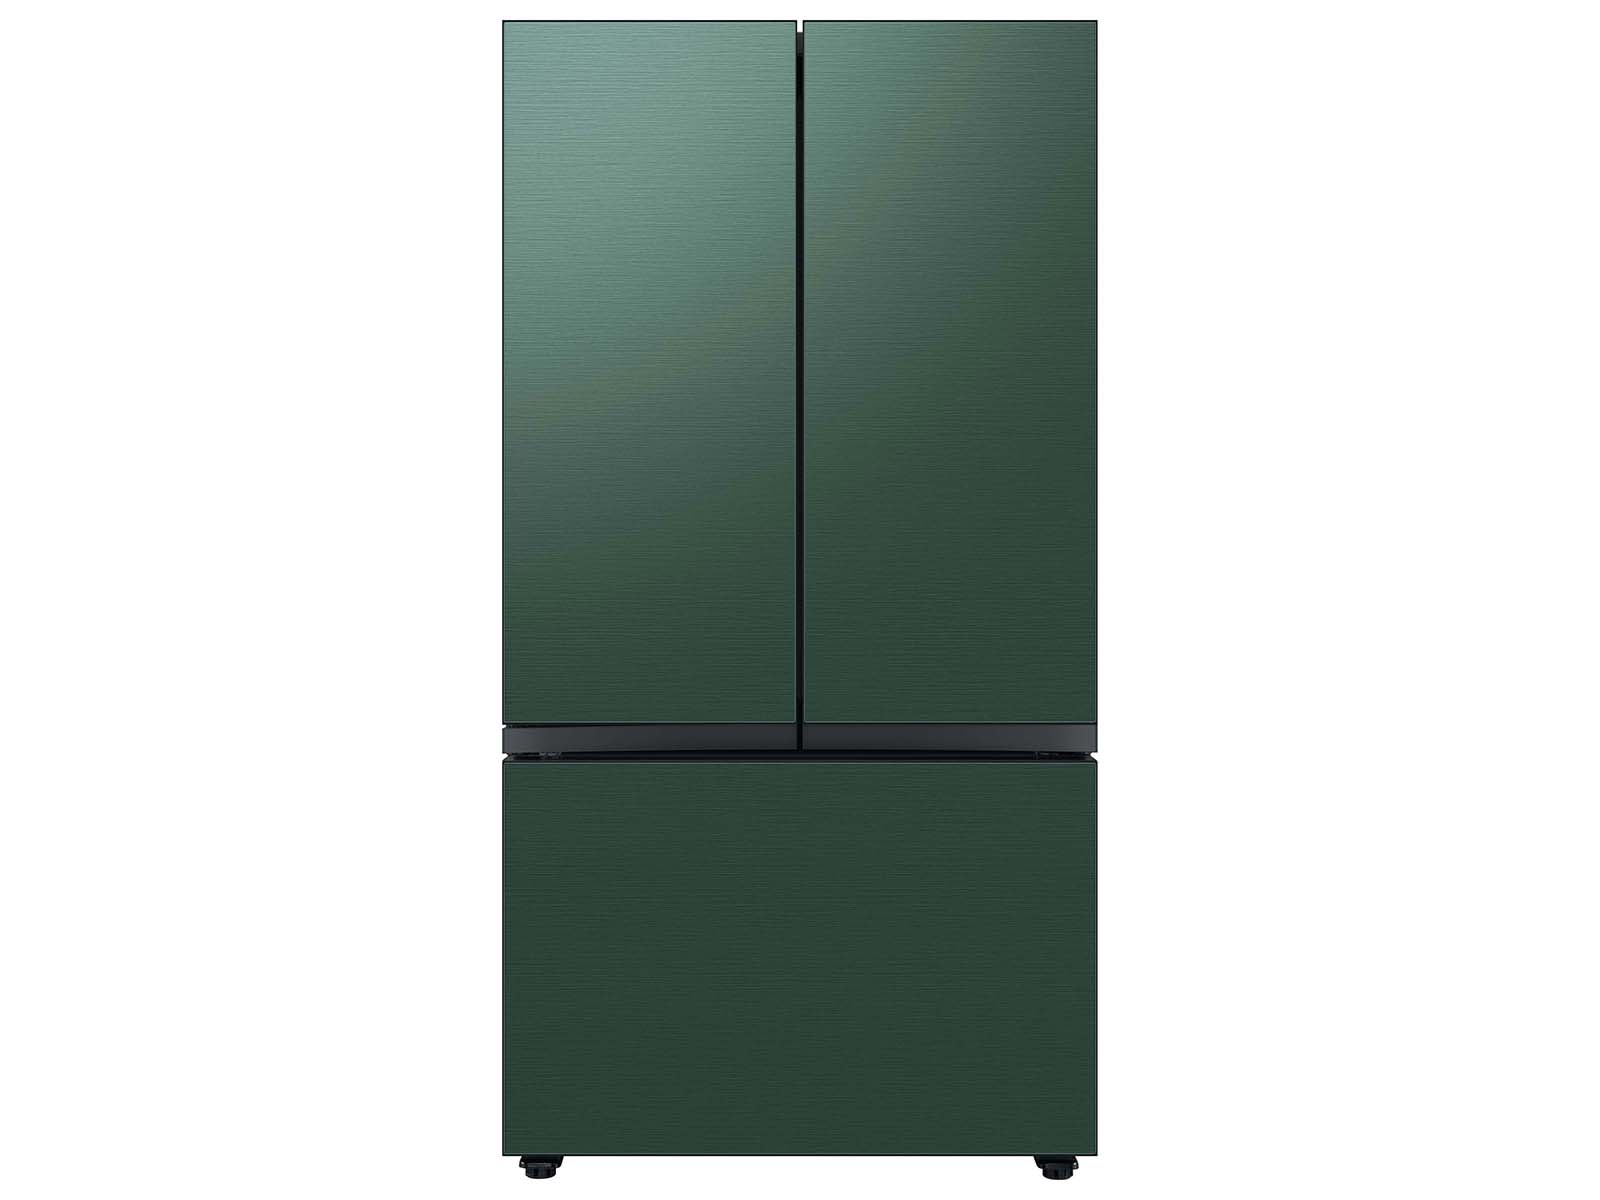 Review: Samsung's Bespoke Dishwasher - Dream Green DIY